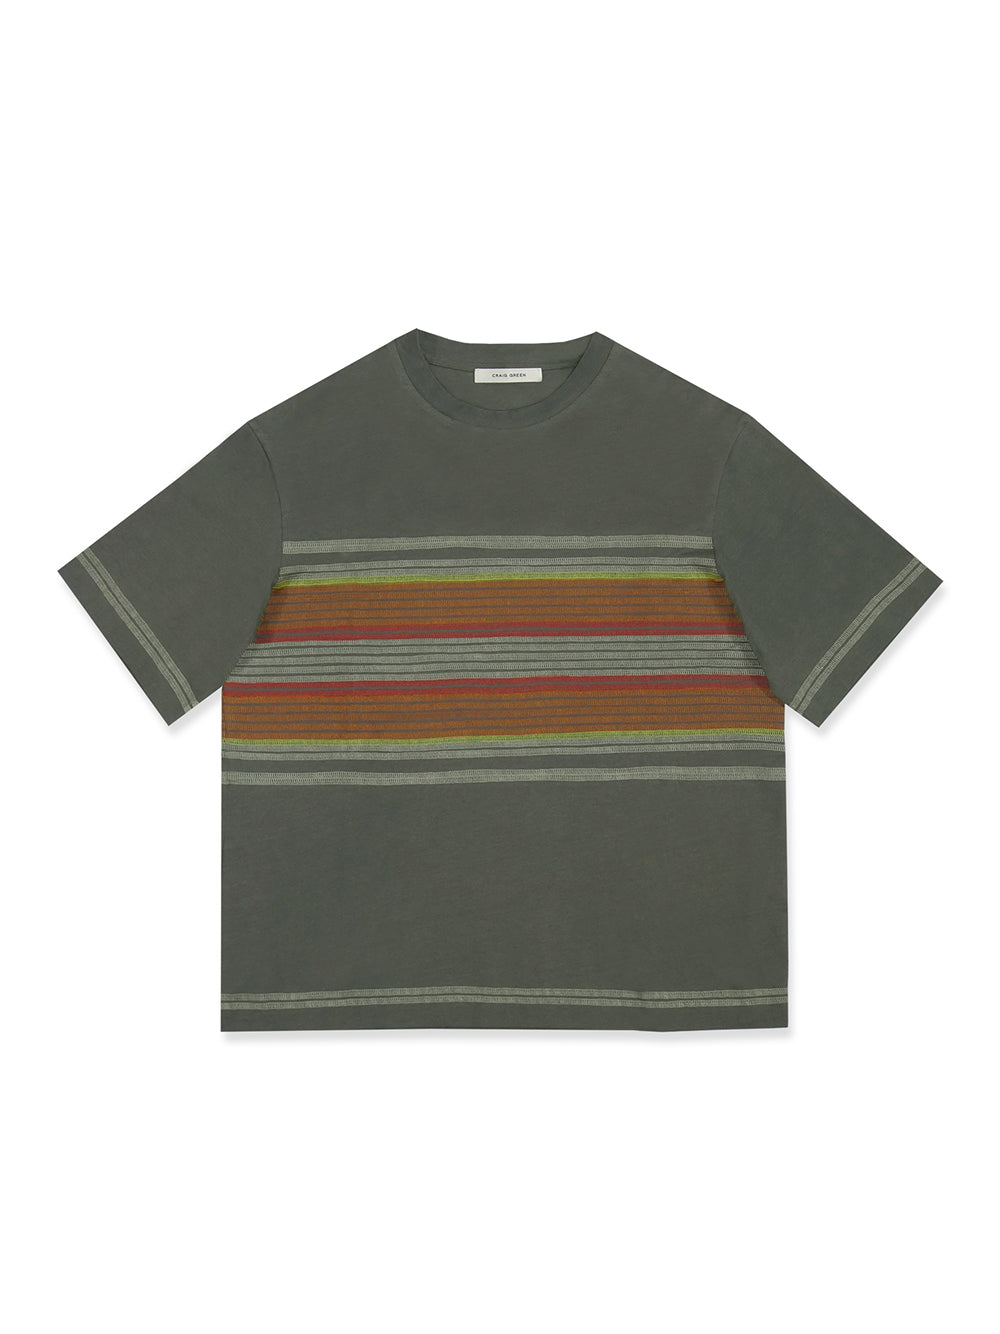 Flatlock Stripe T-Shirt (Olive)